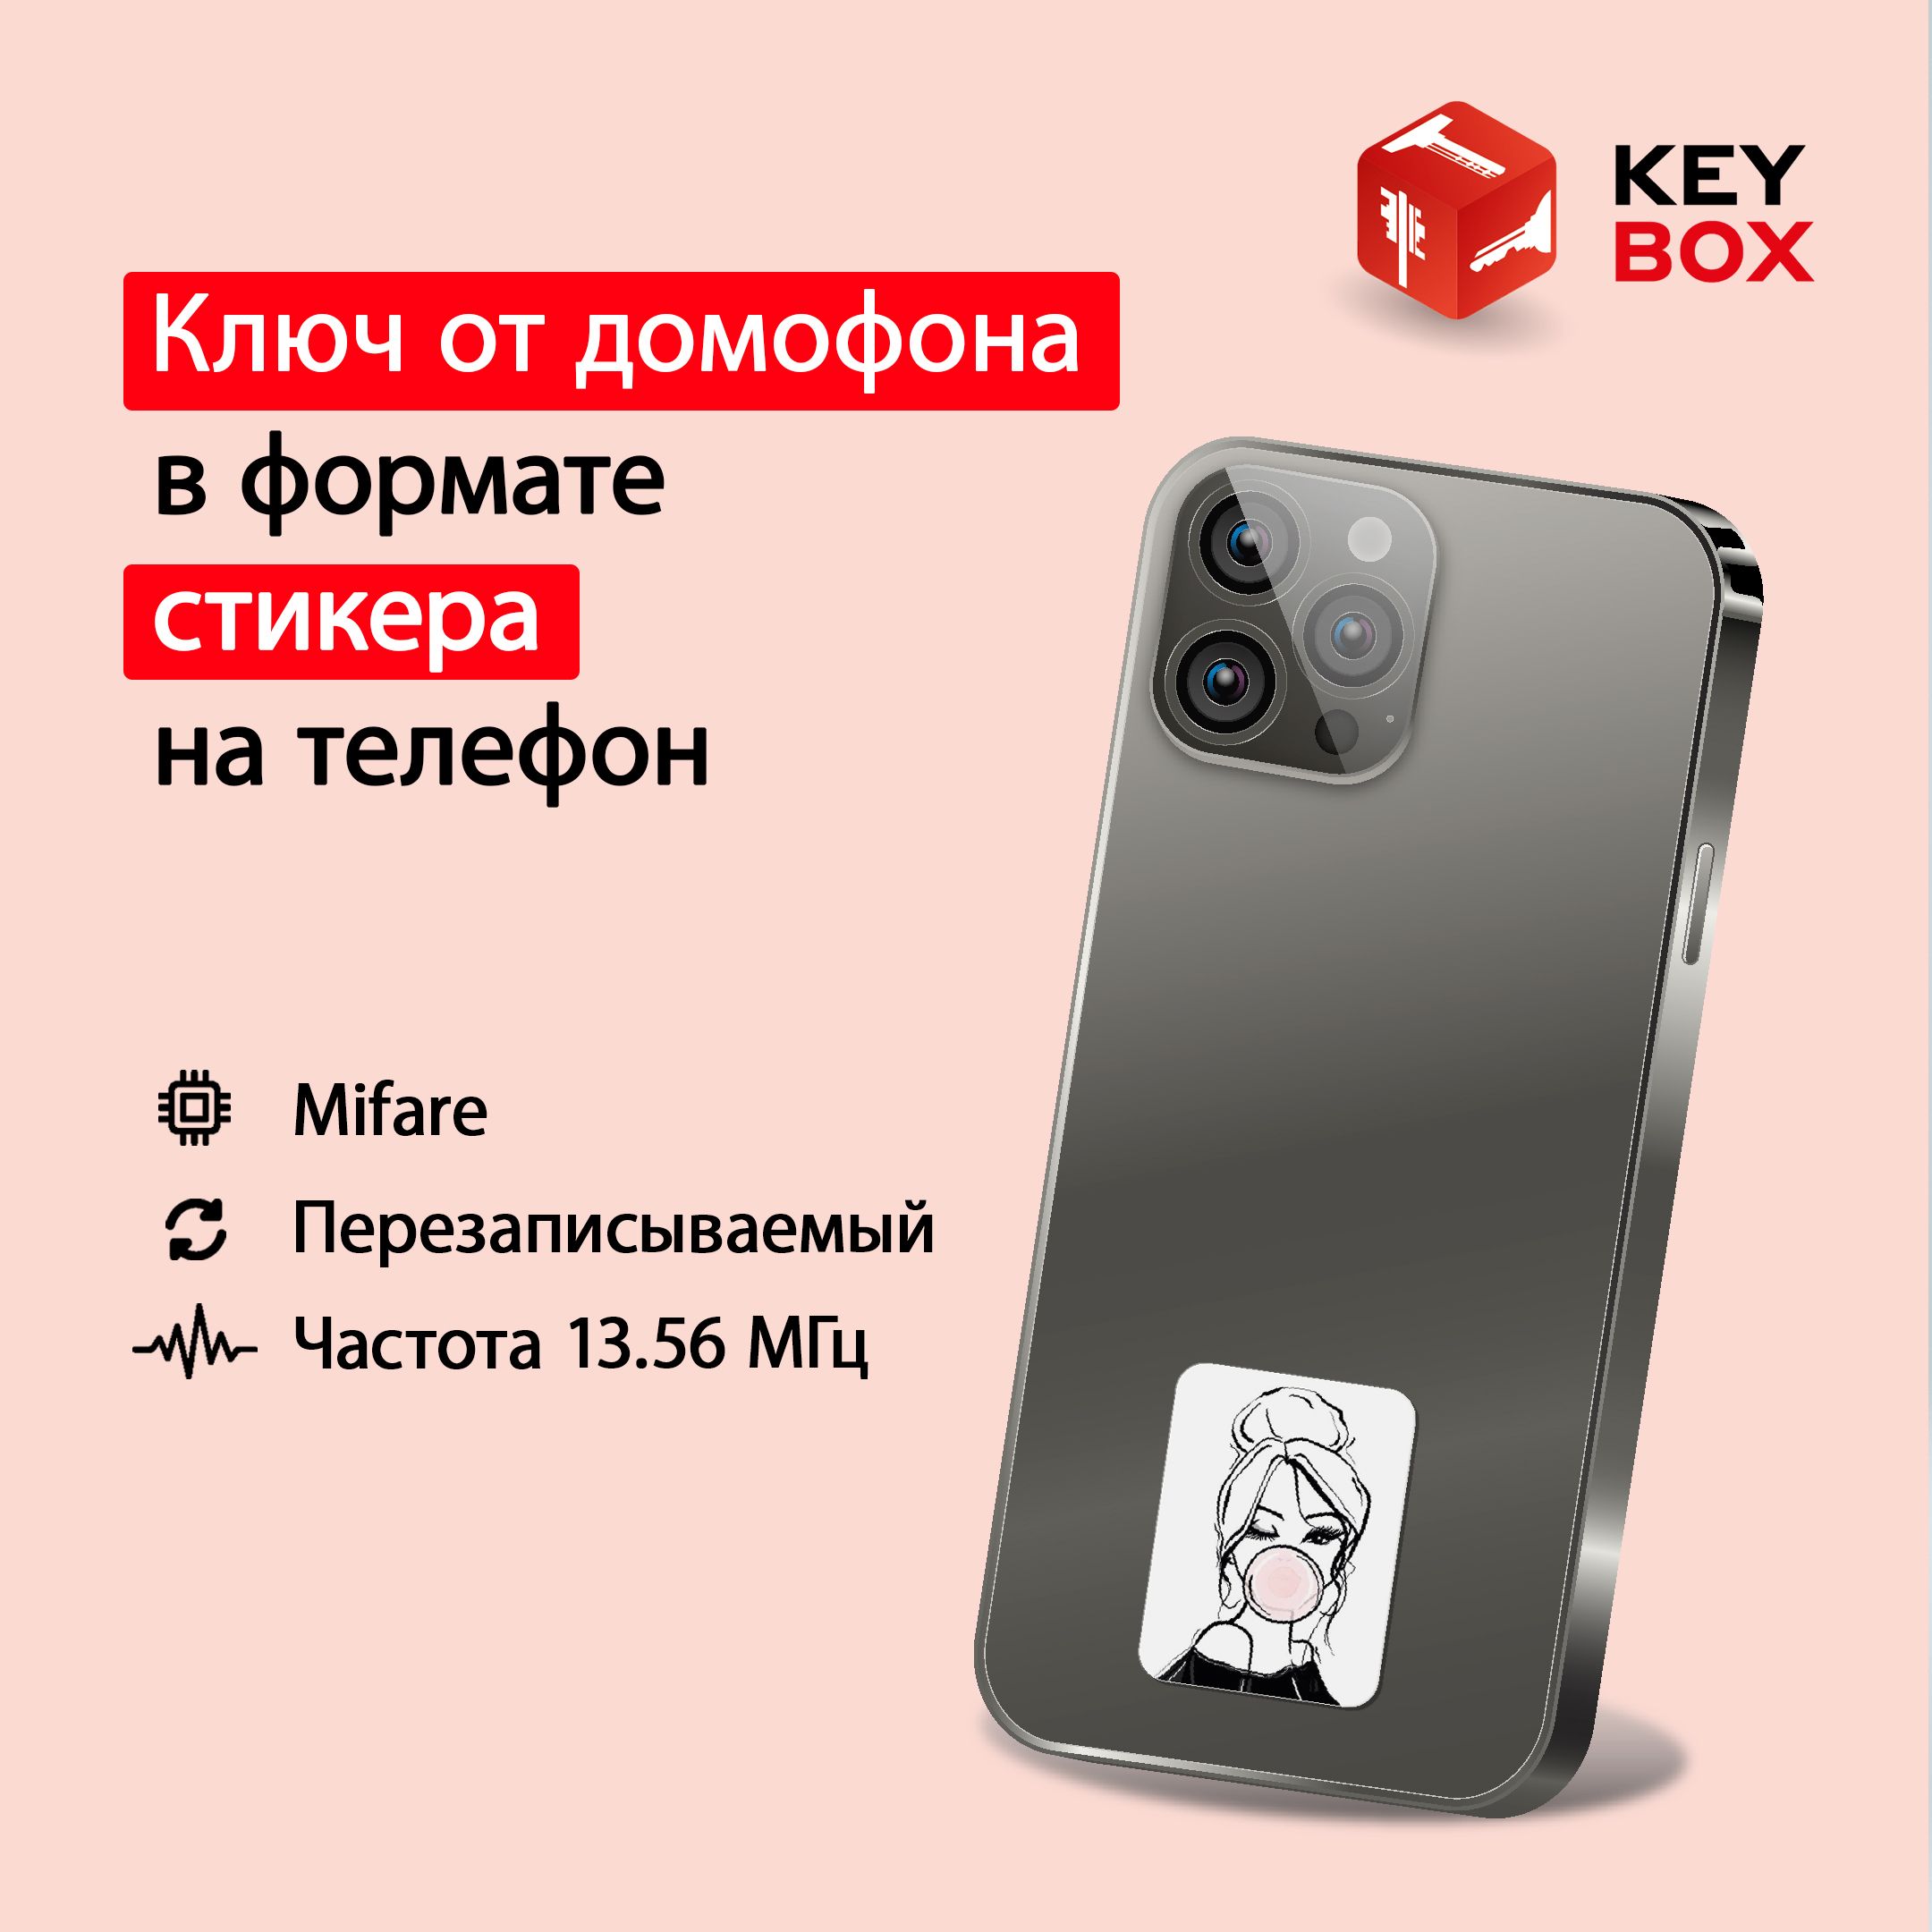 Ключ-стикер для домофона на телефон Keybox Mifare St003, Девушка магнитная ключ карта аваиид rfid mifare nfc 13 56 mgh 5 шт